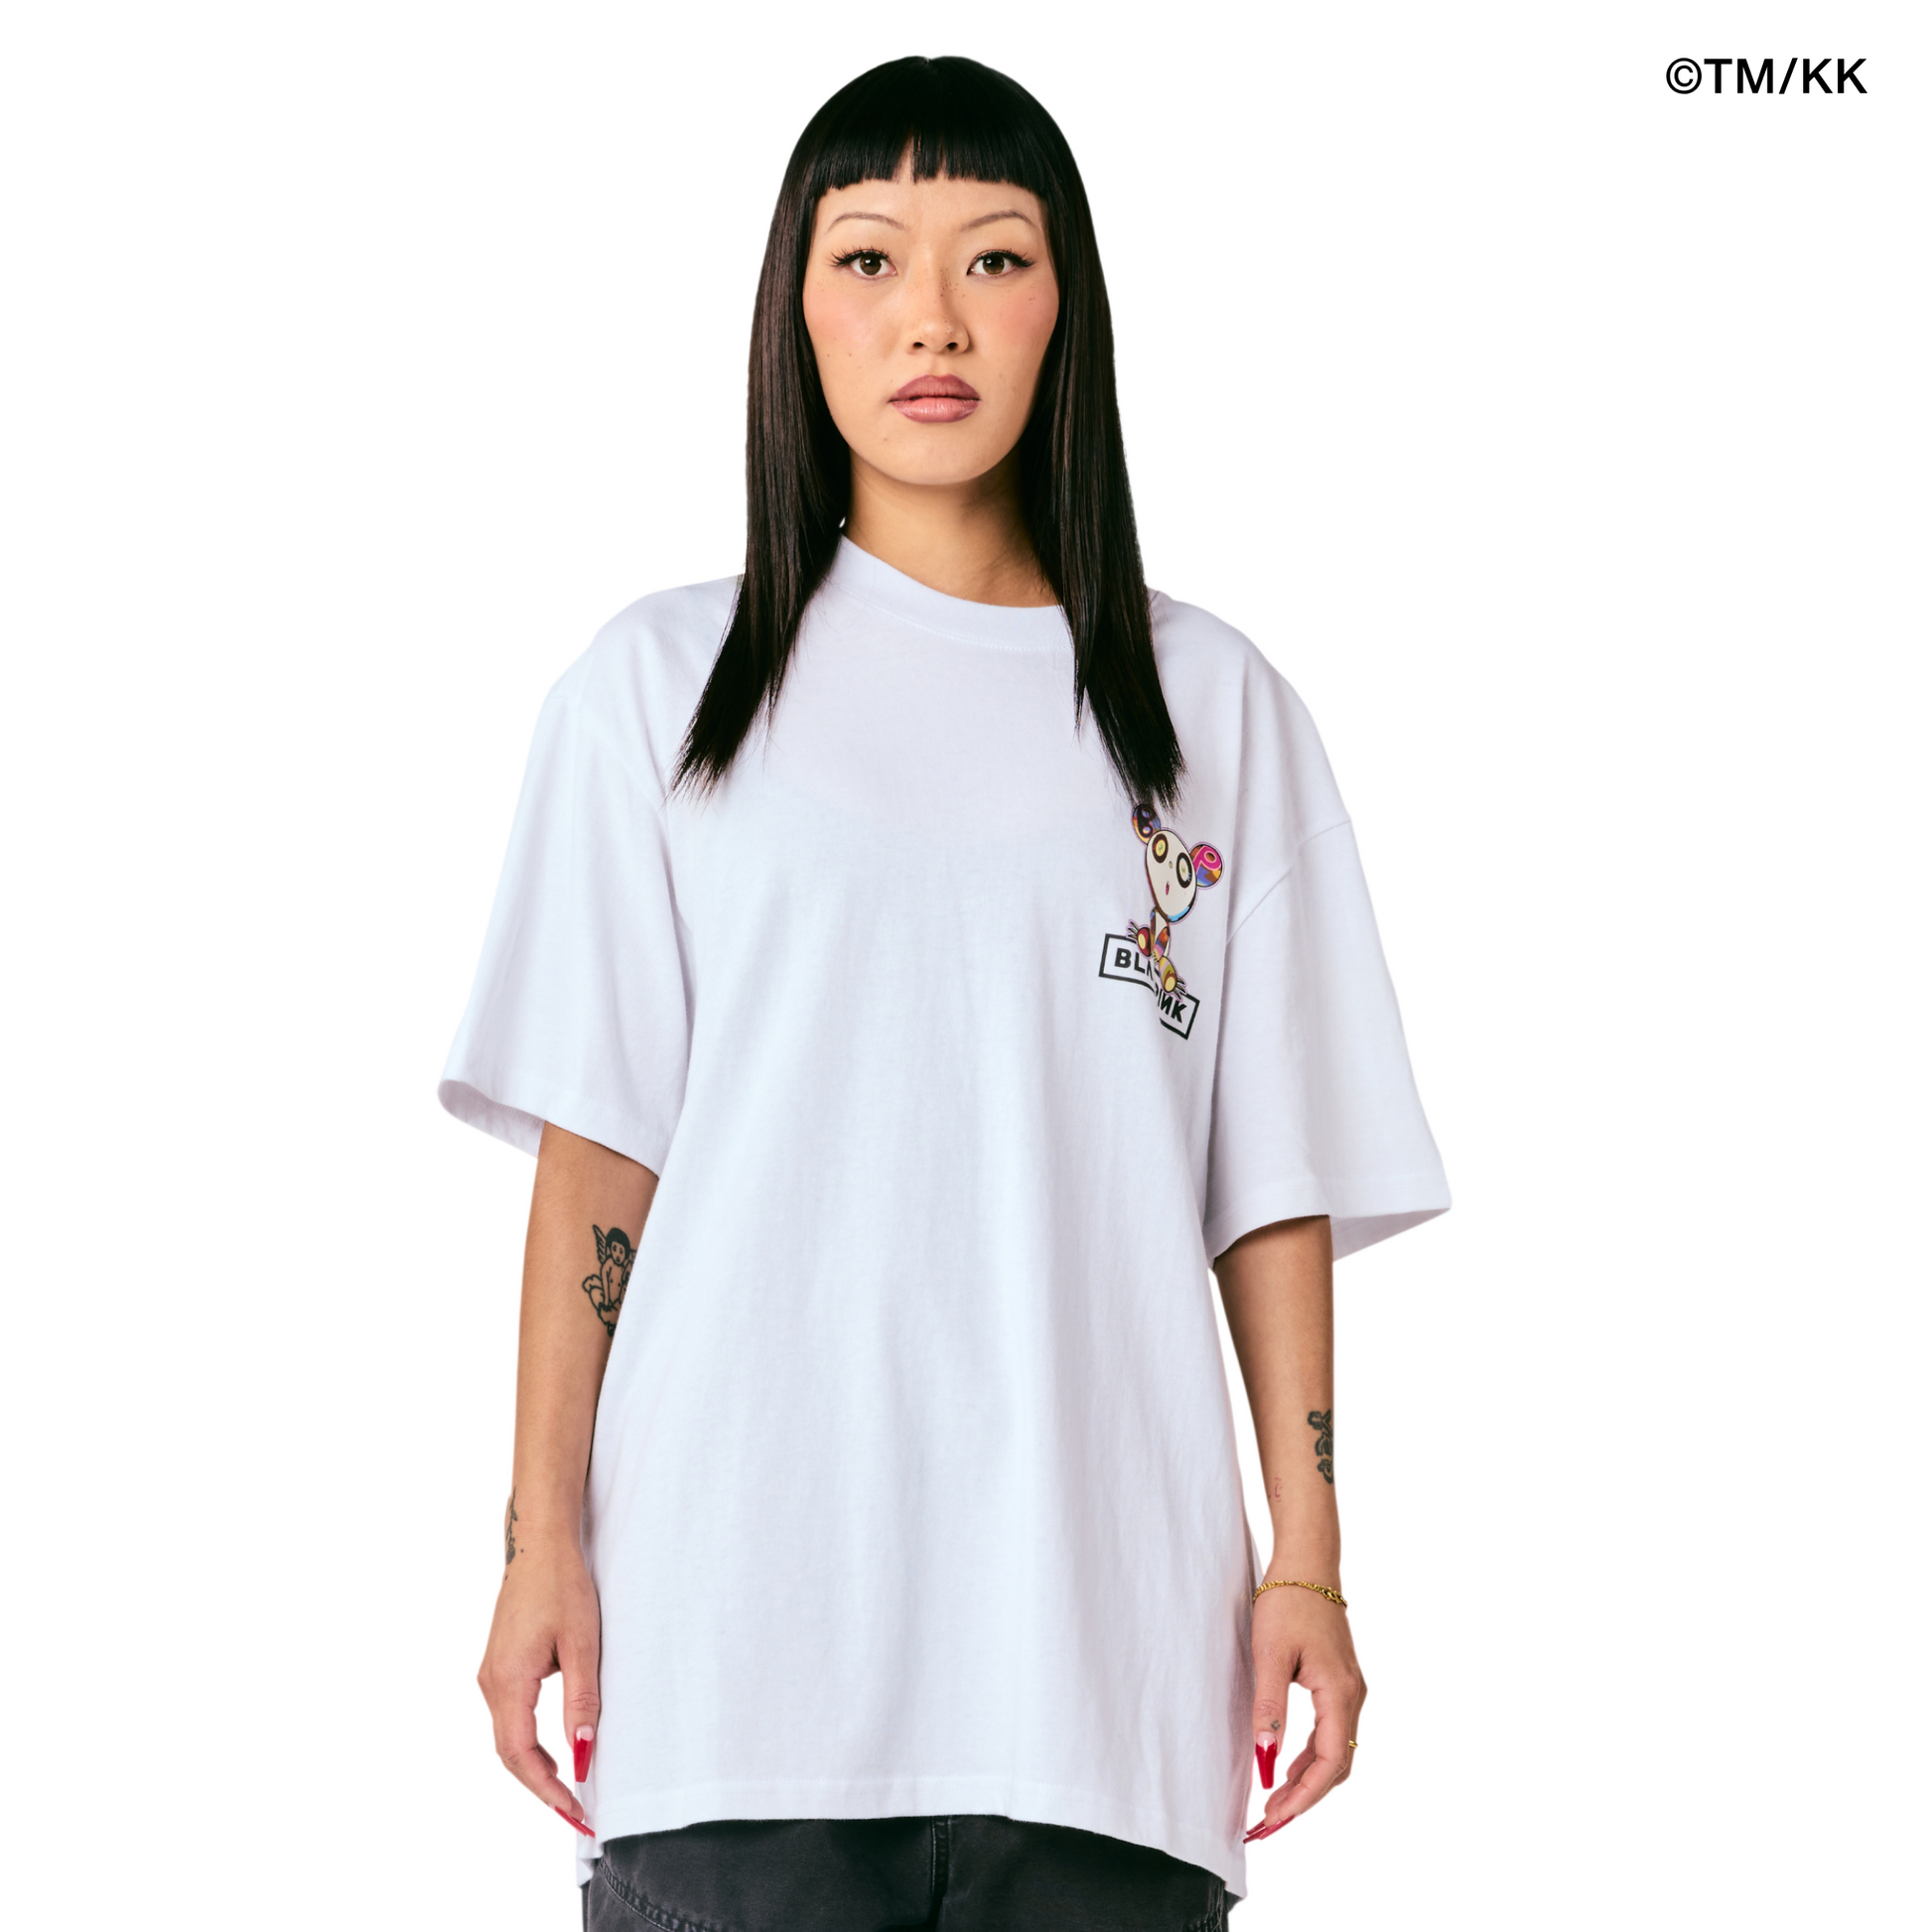 Takashi Murakami x BLACKPINK T-Shirt - ウェア